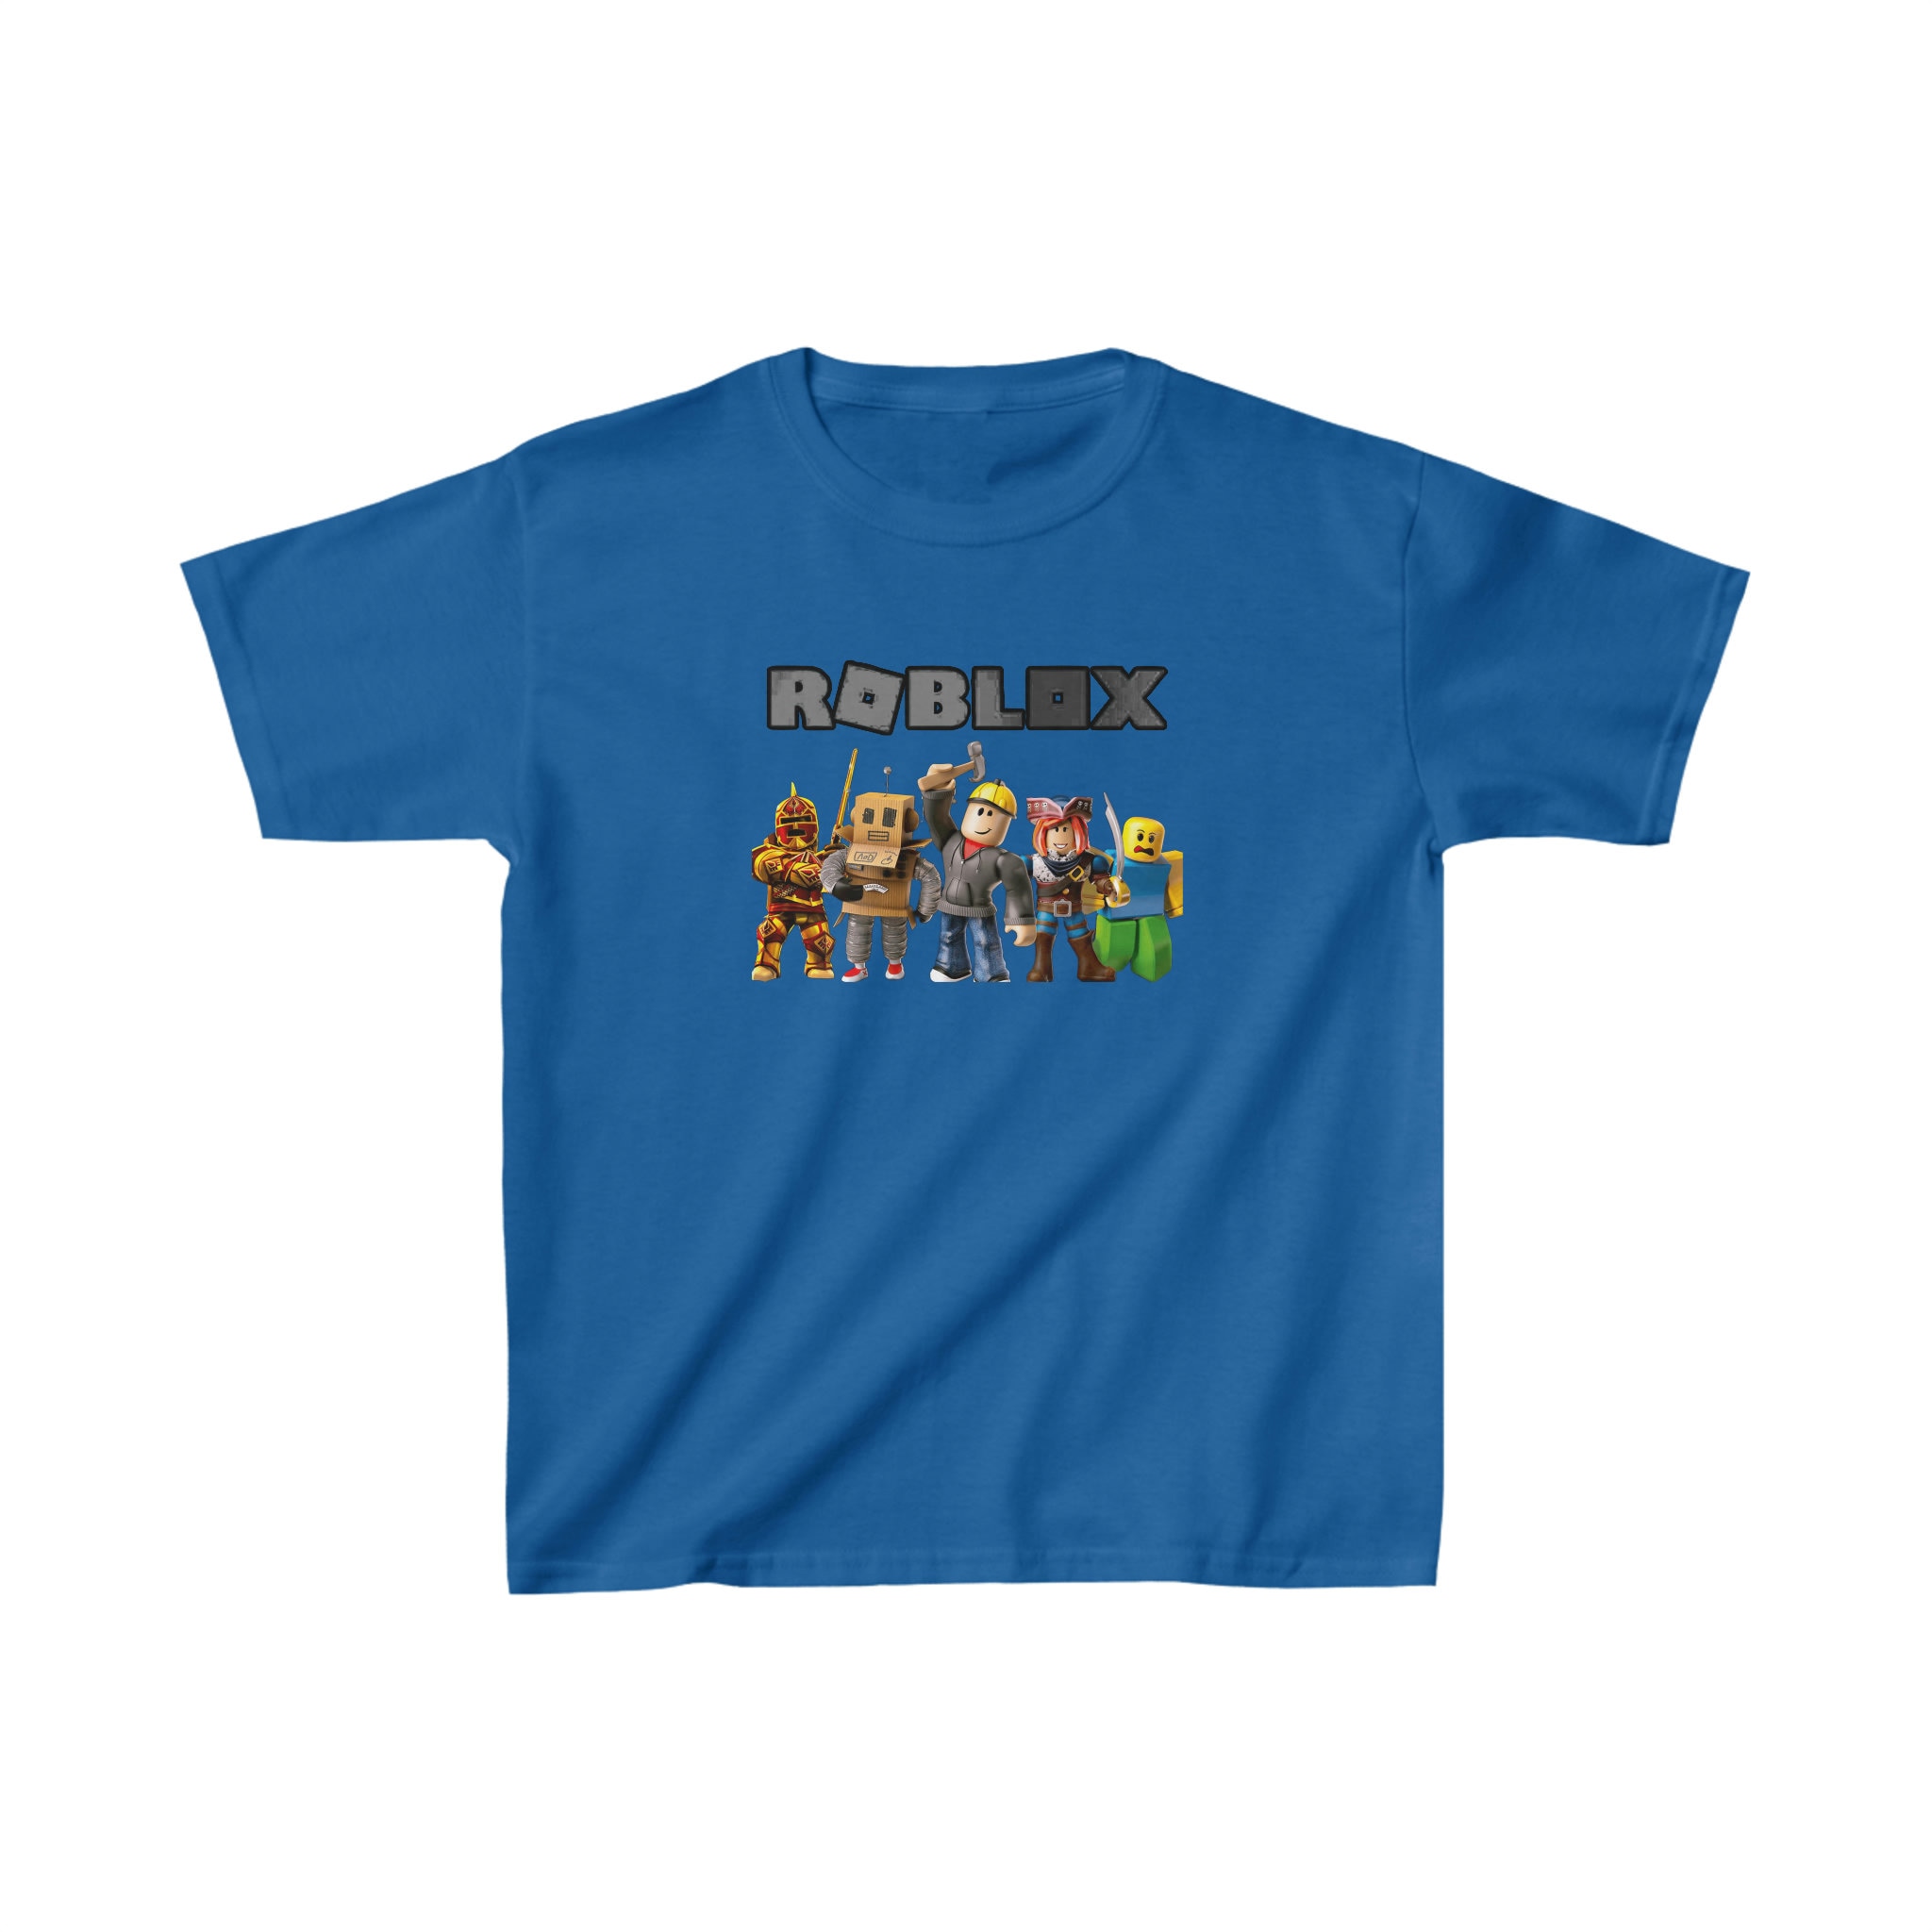 Cute Roblox Girls Unisex T-Shirt - Teeruto